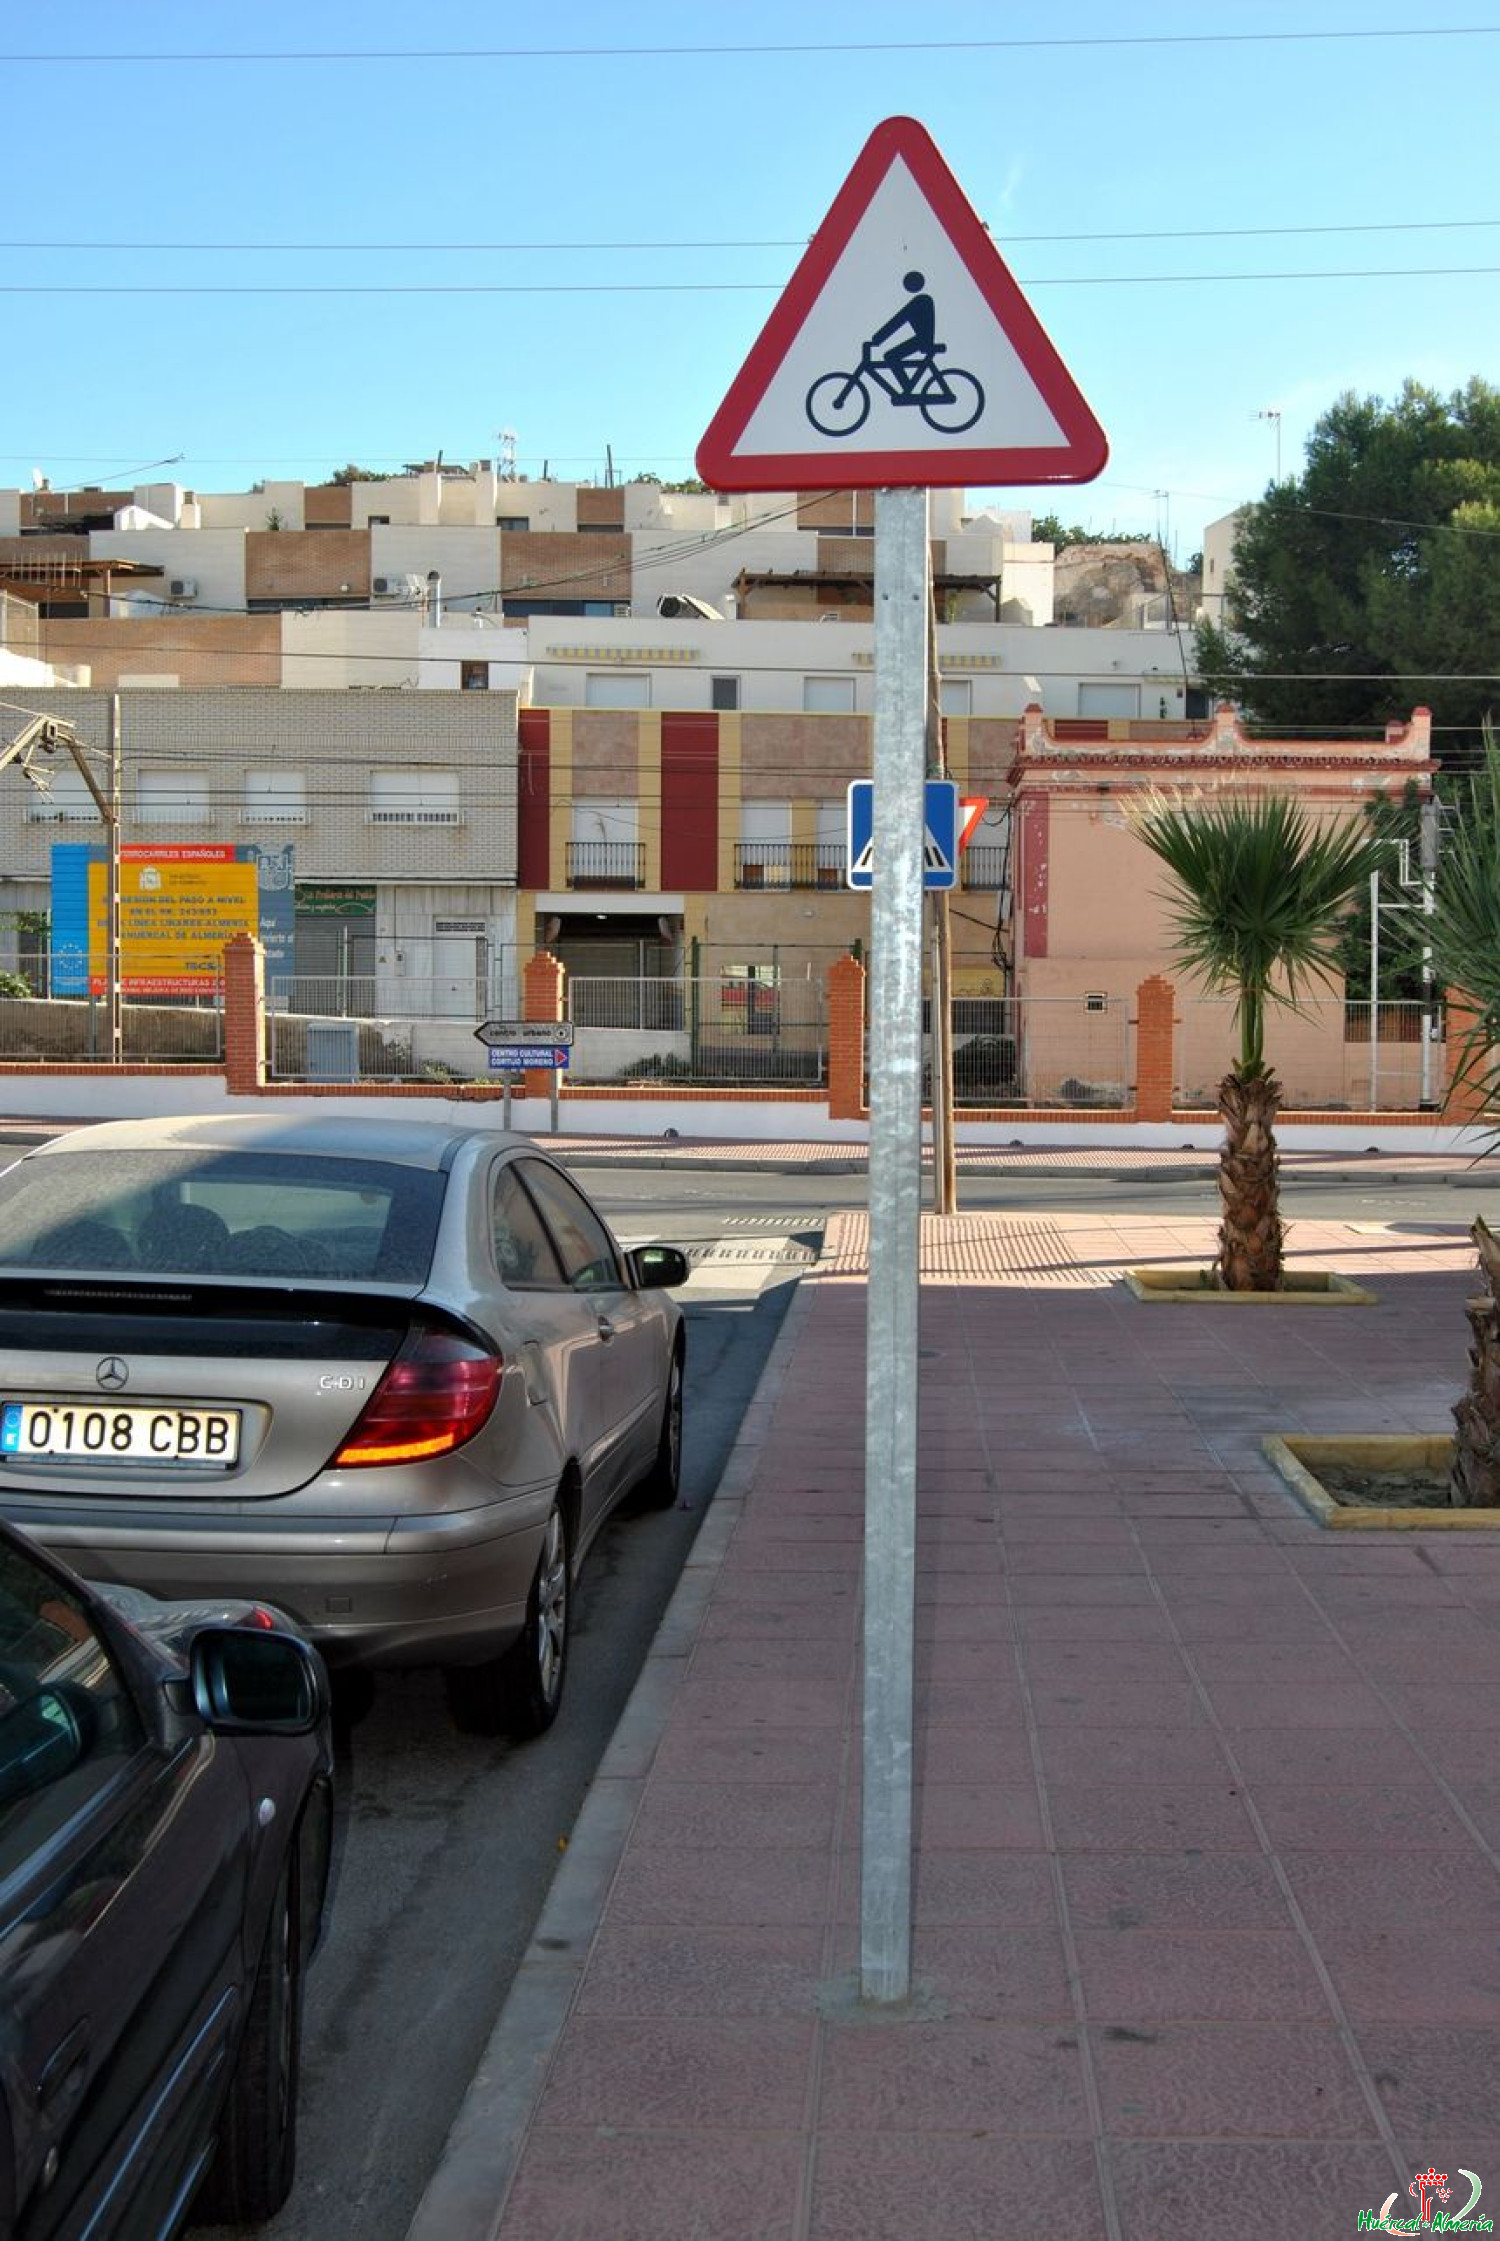 Red de ciclo-calles de Huércal de Almería